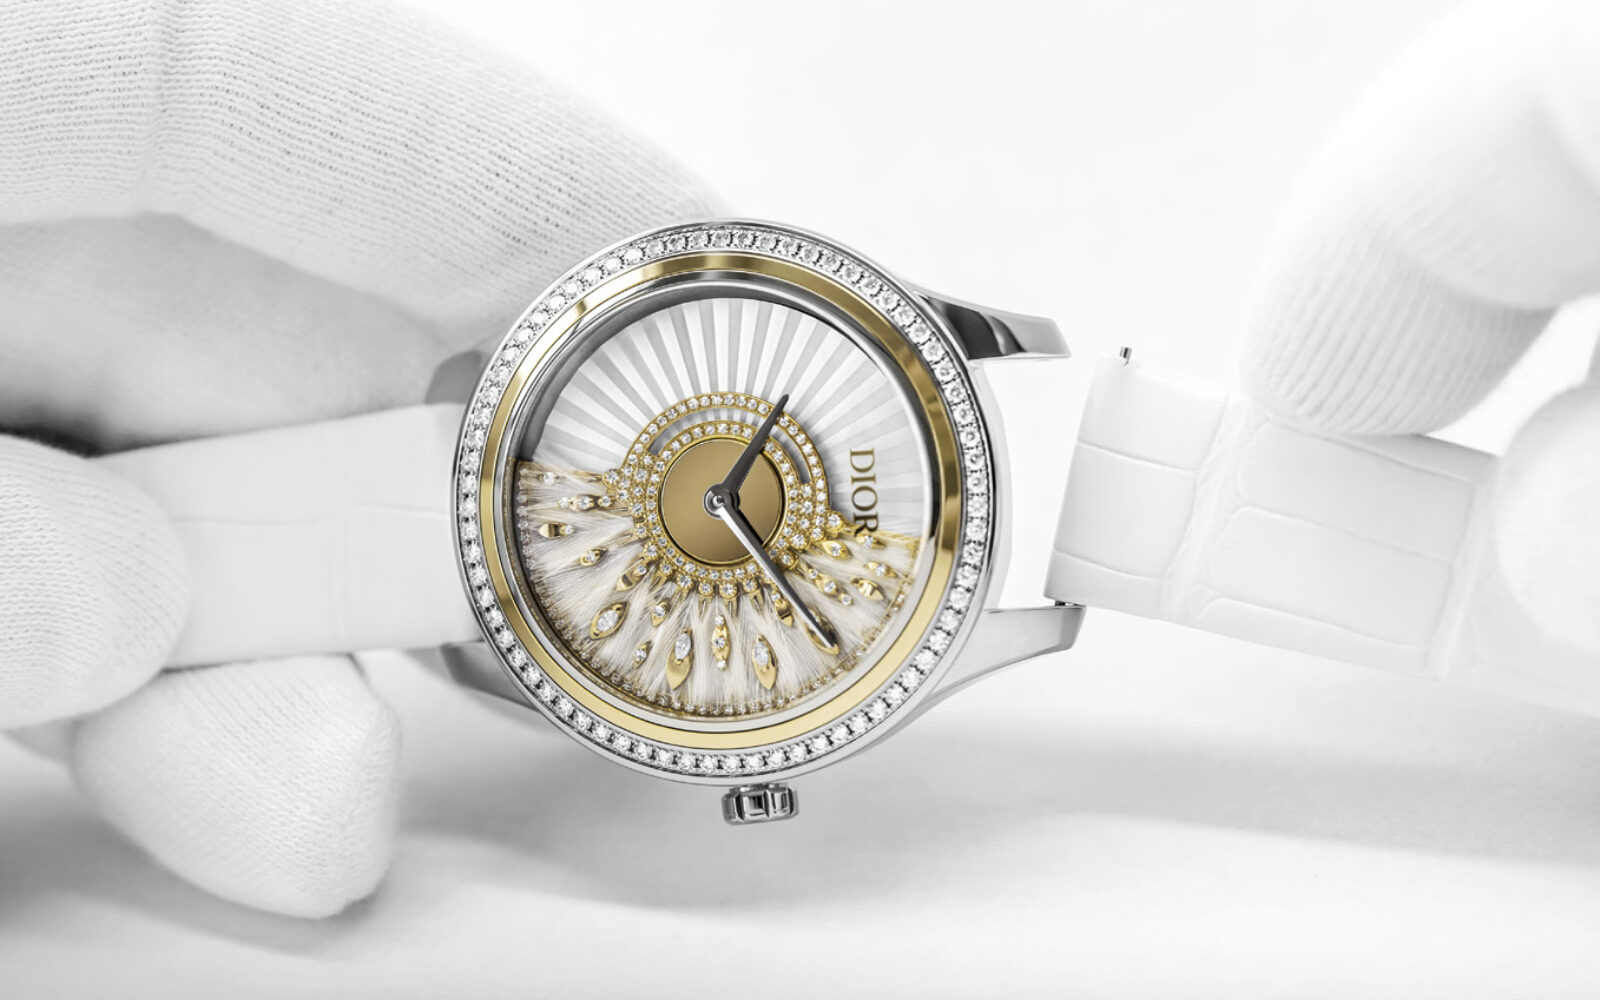 Dior Grand Bal Timepieces